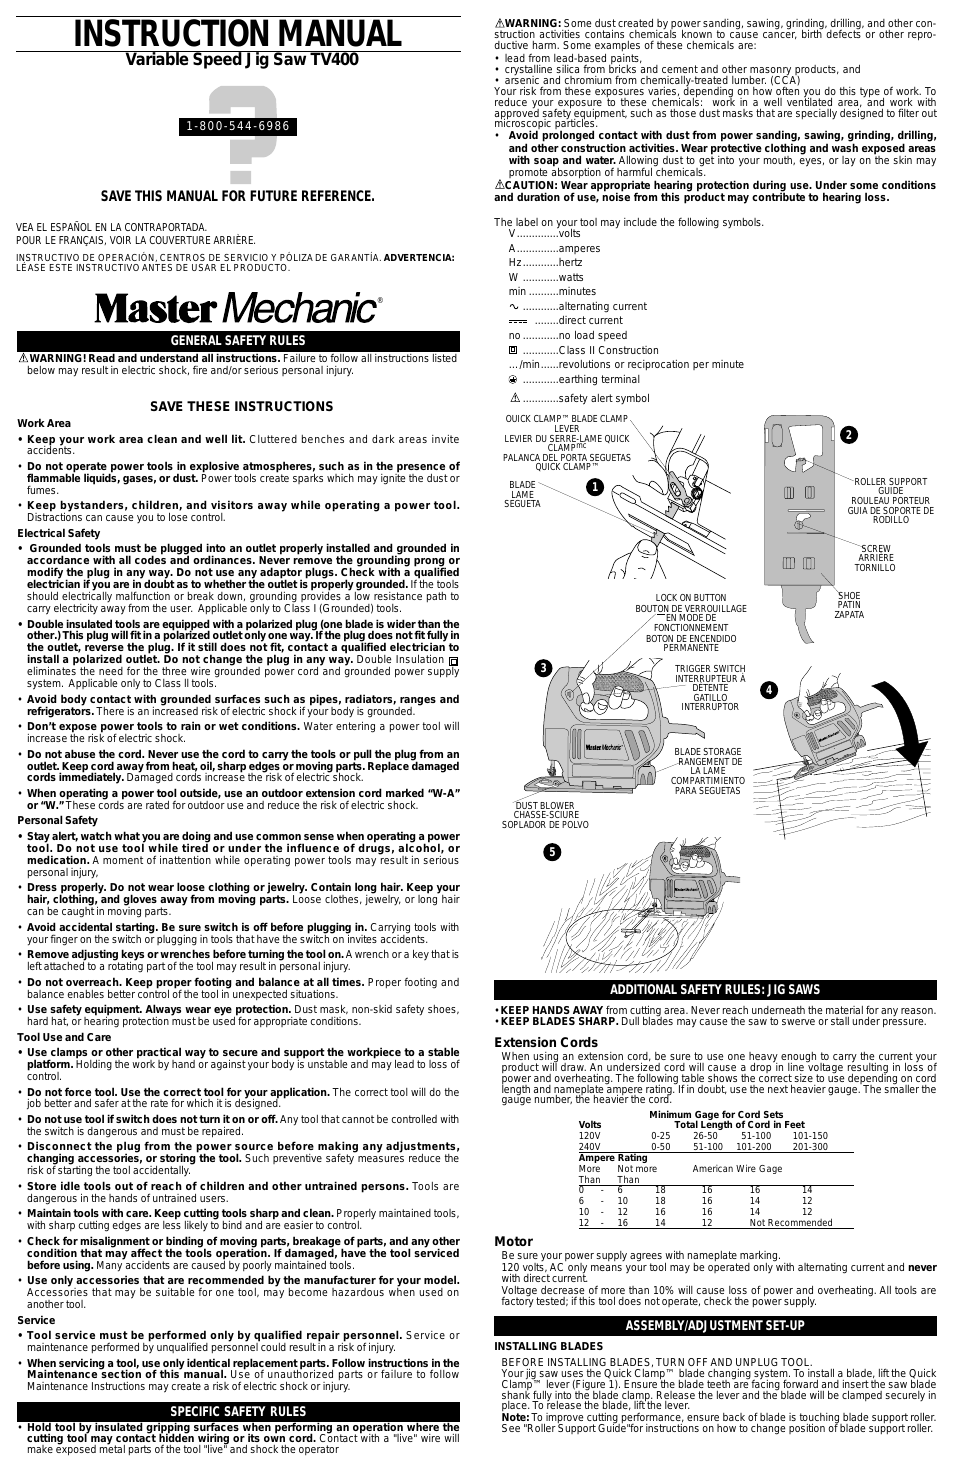 Master Mechanic TV400